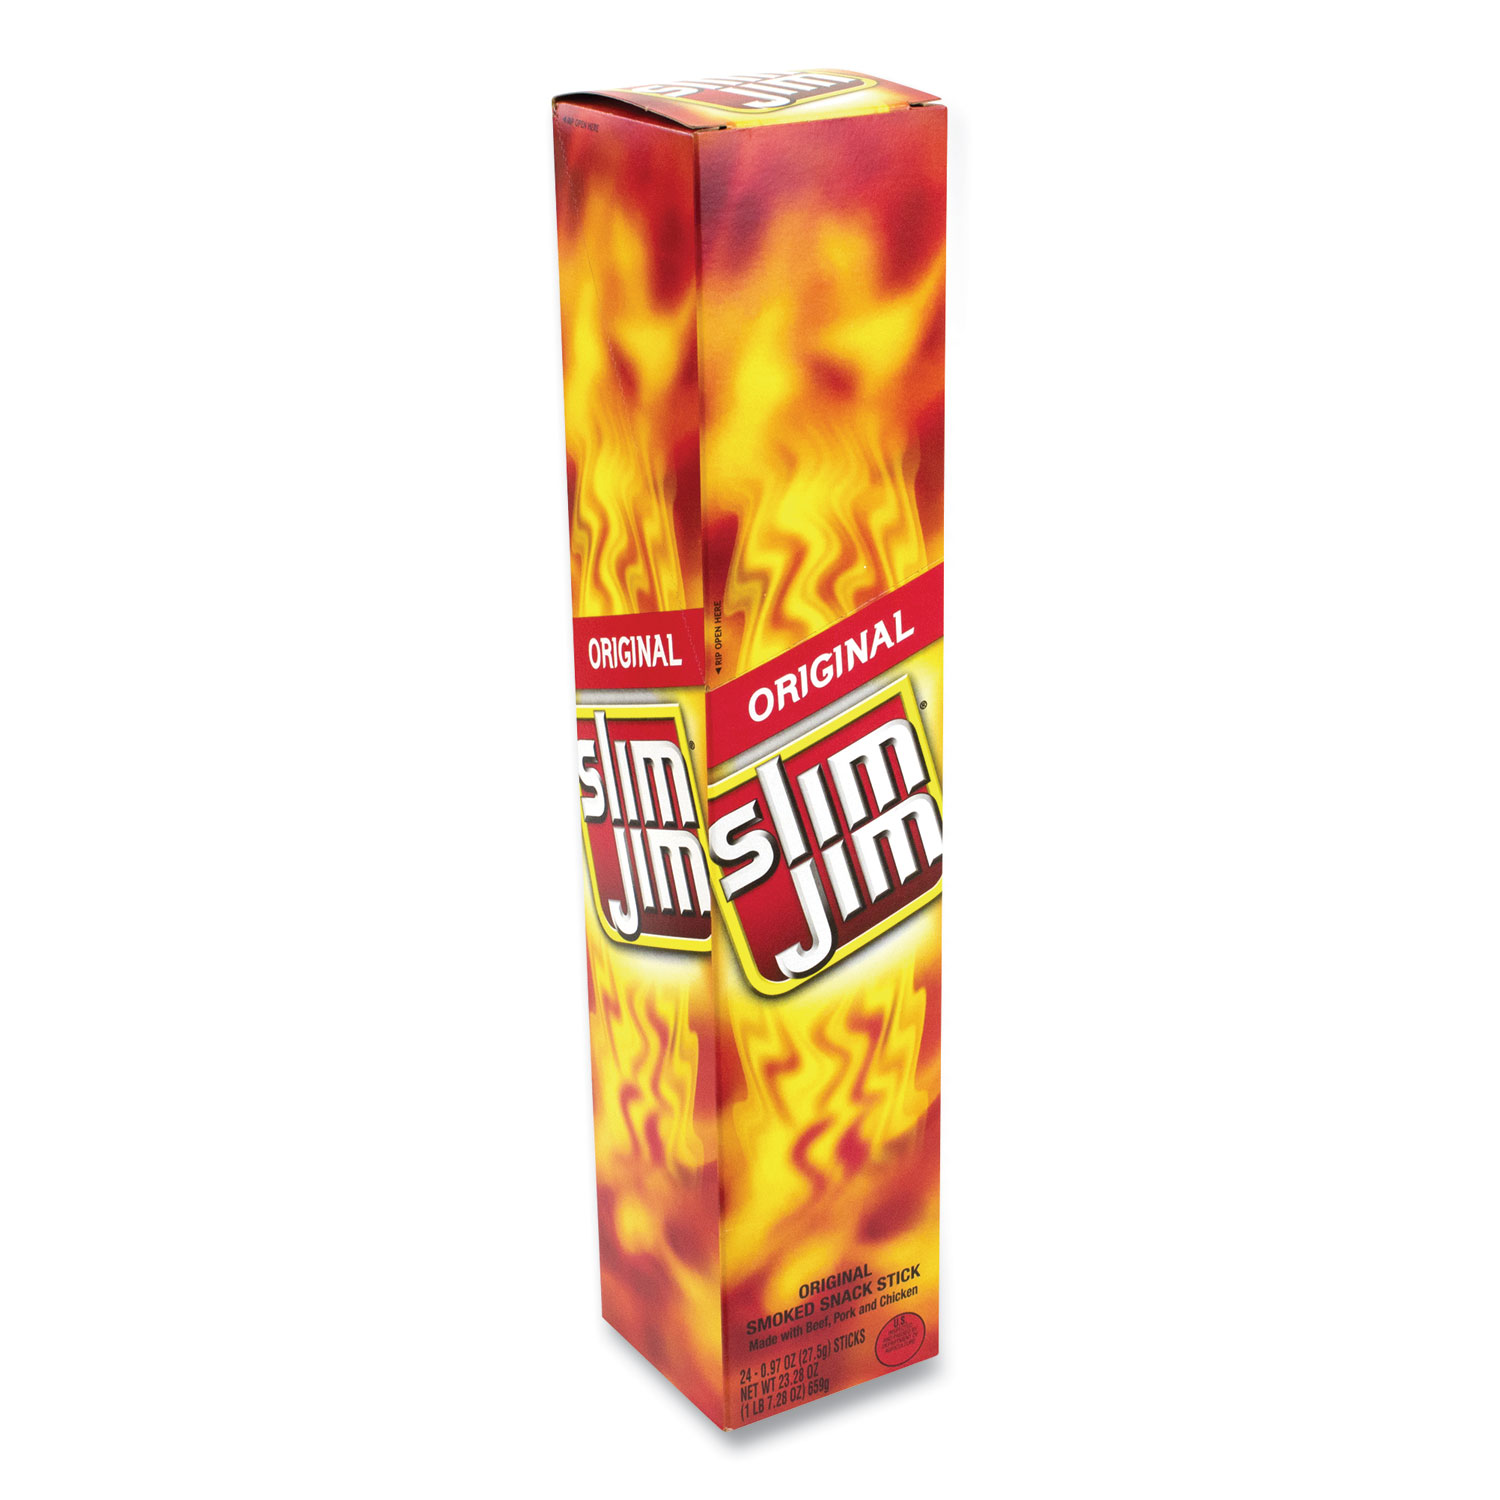 Slim Jim® Original Smoked Snack Stick, 0.97 oz Stick, 24 Sticks/Box, Free Delivery in 1-4 Business Days